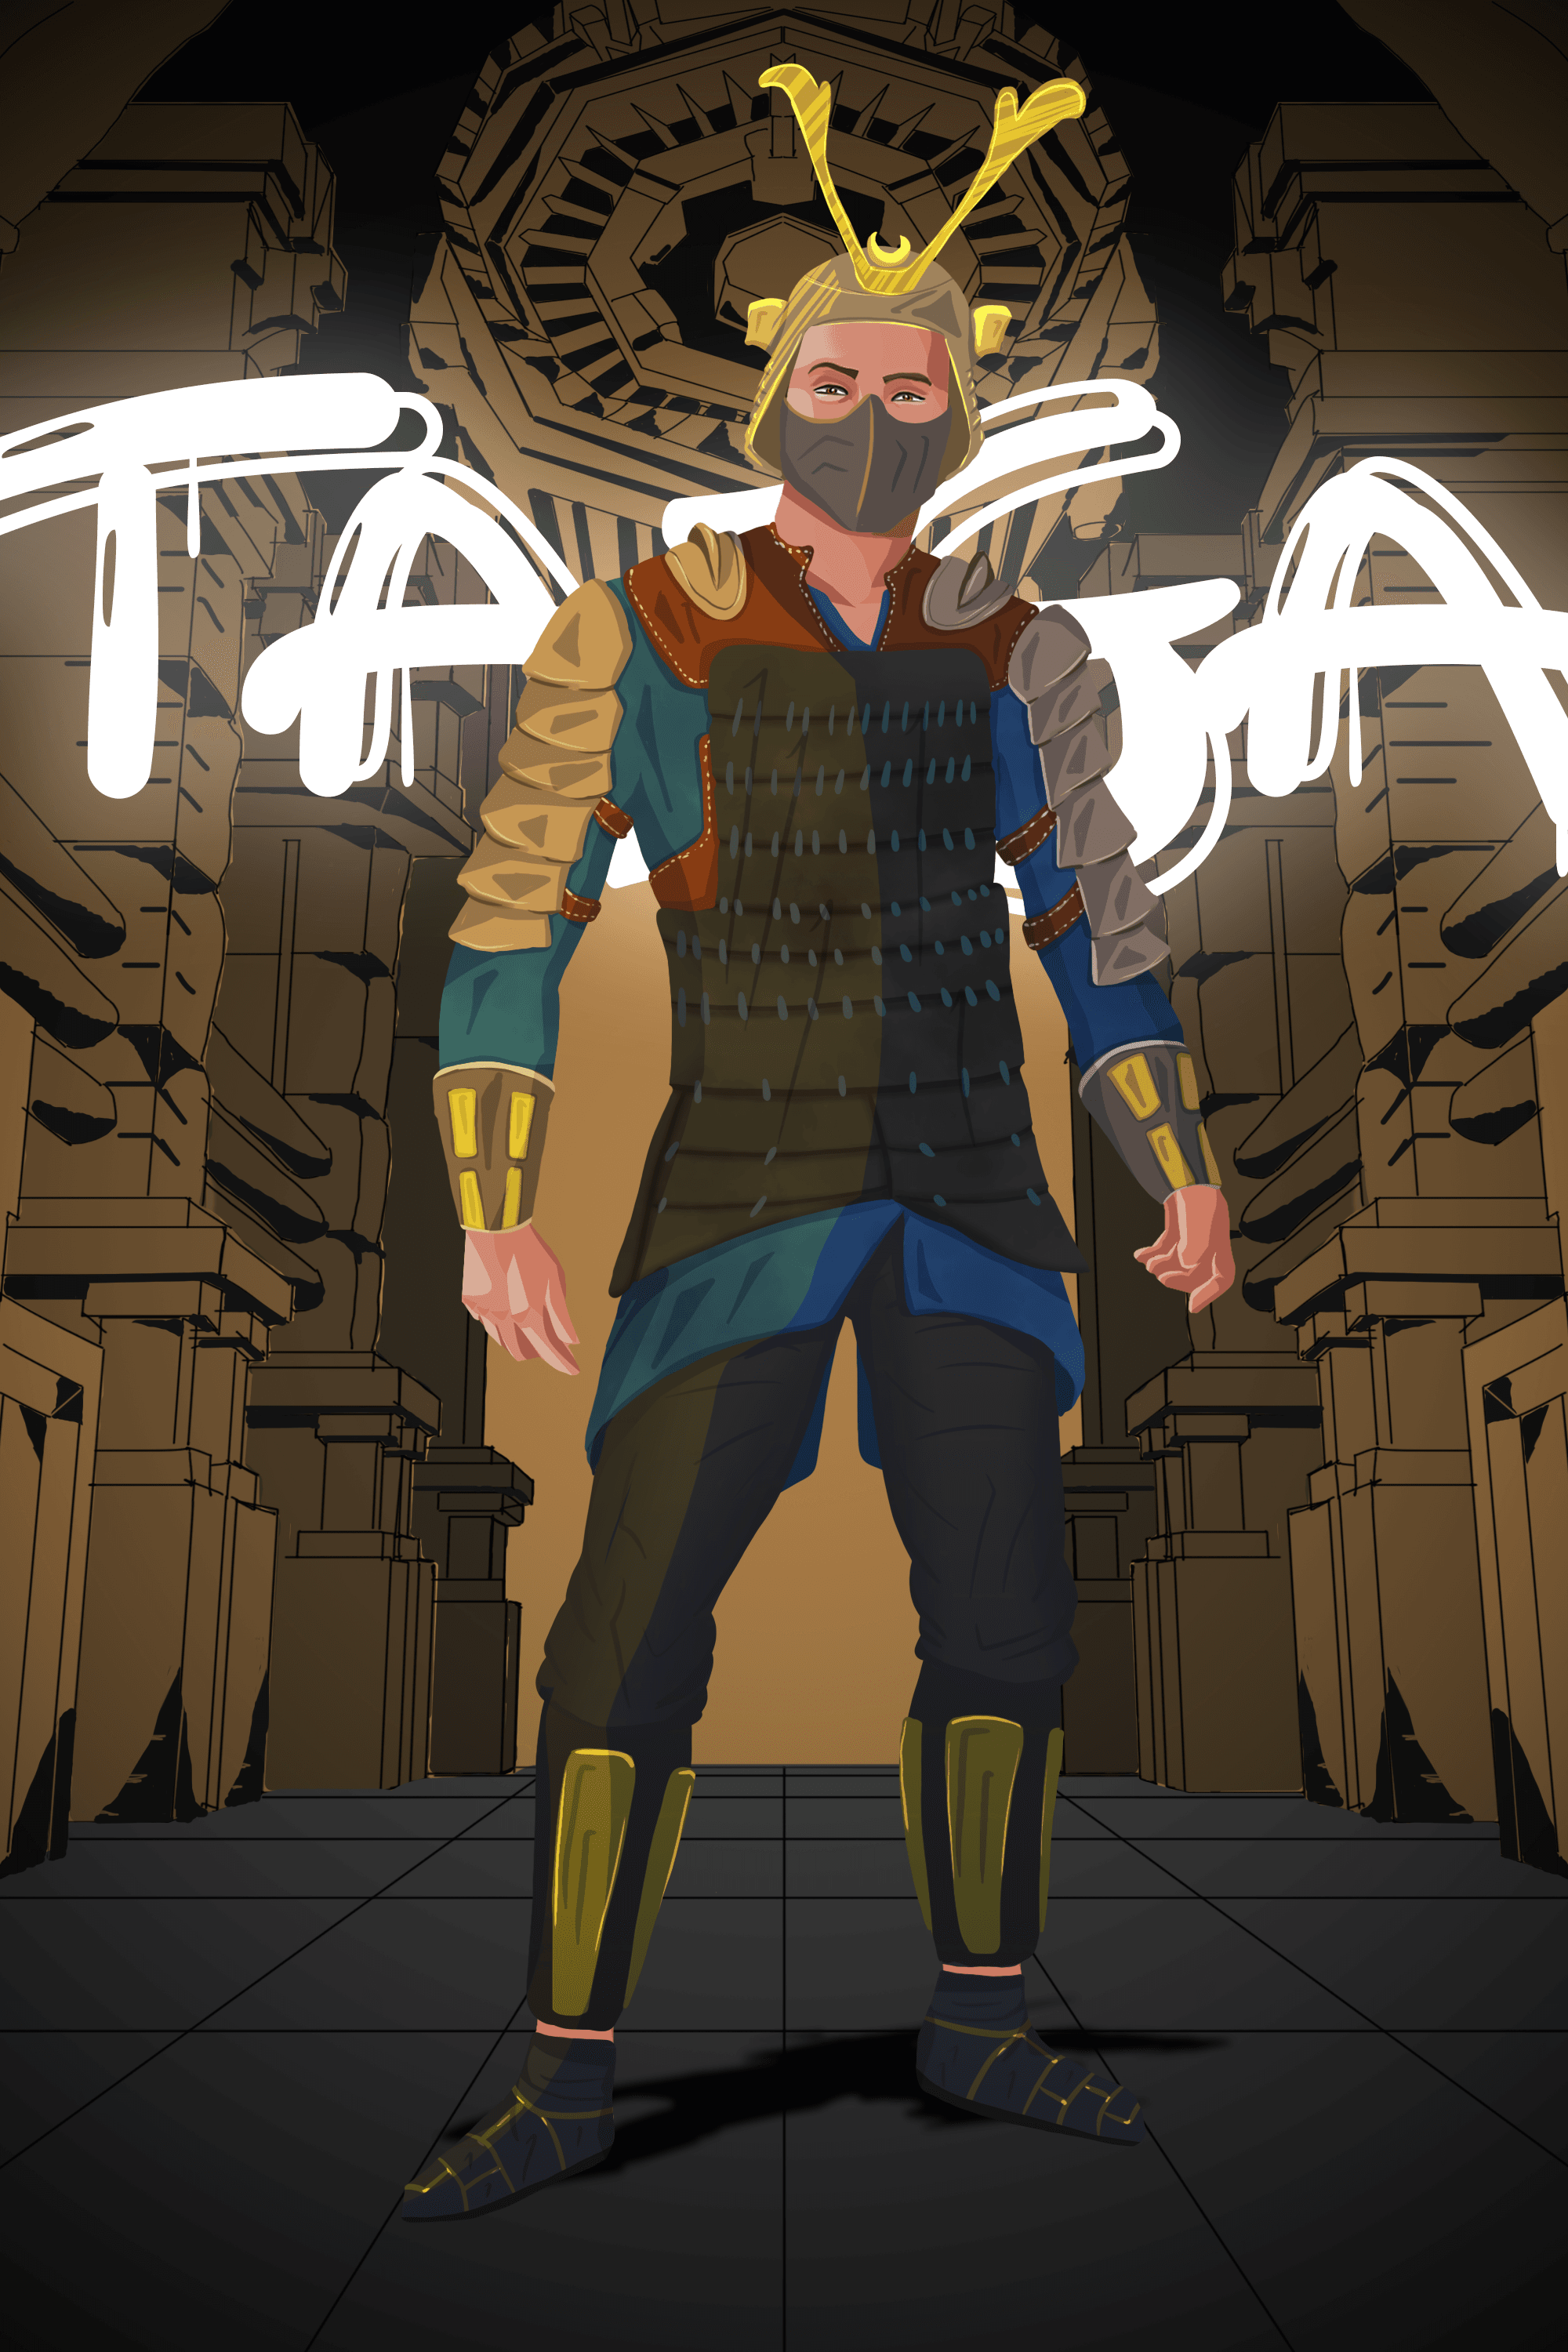 Taiga the Samurai